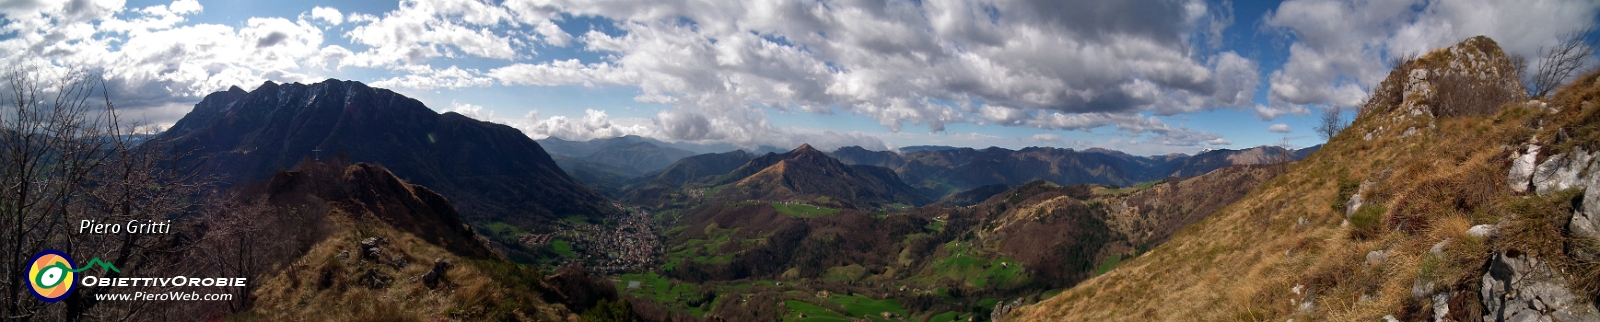 03 Panoramica dal Monte Castello -3.jpg